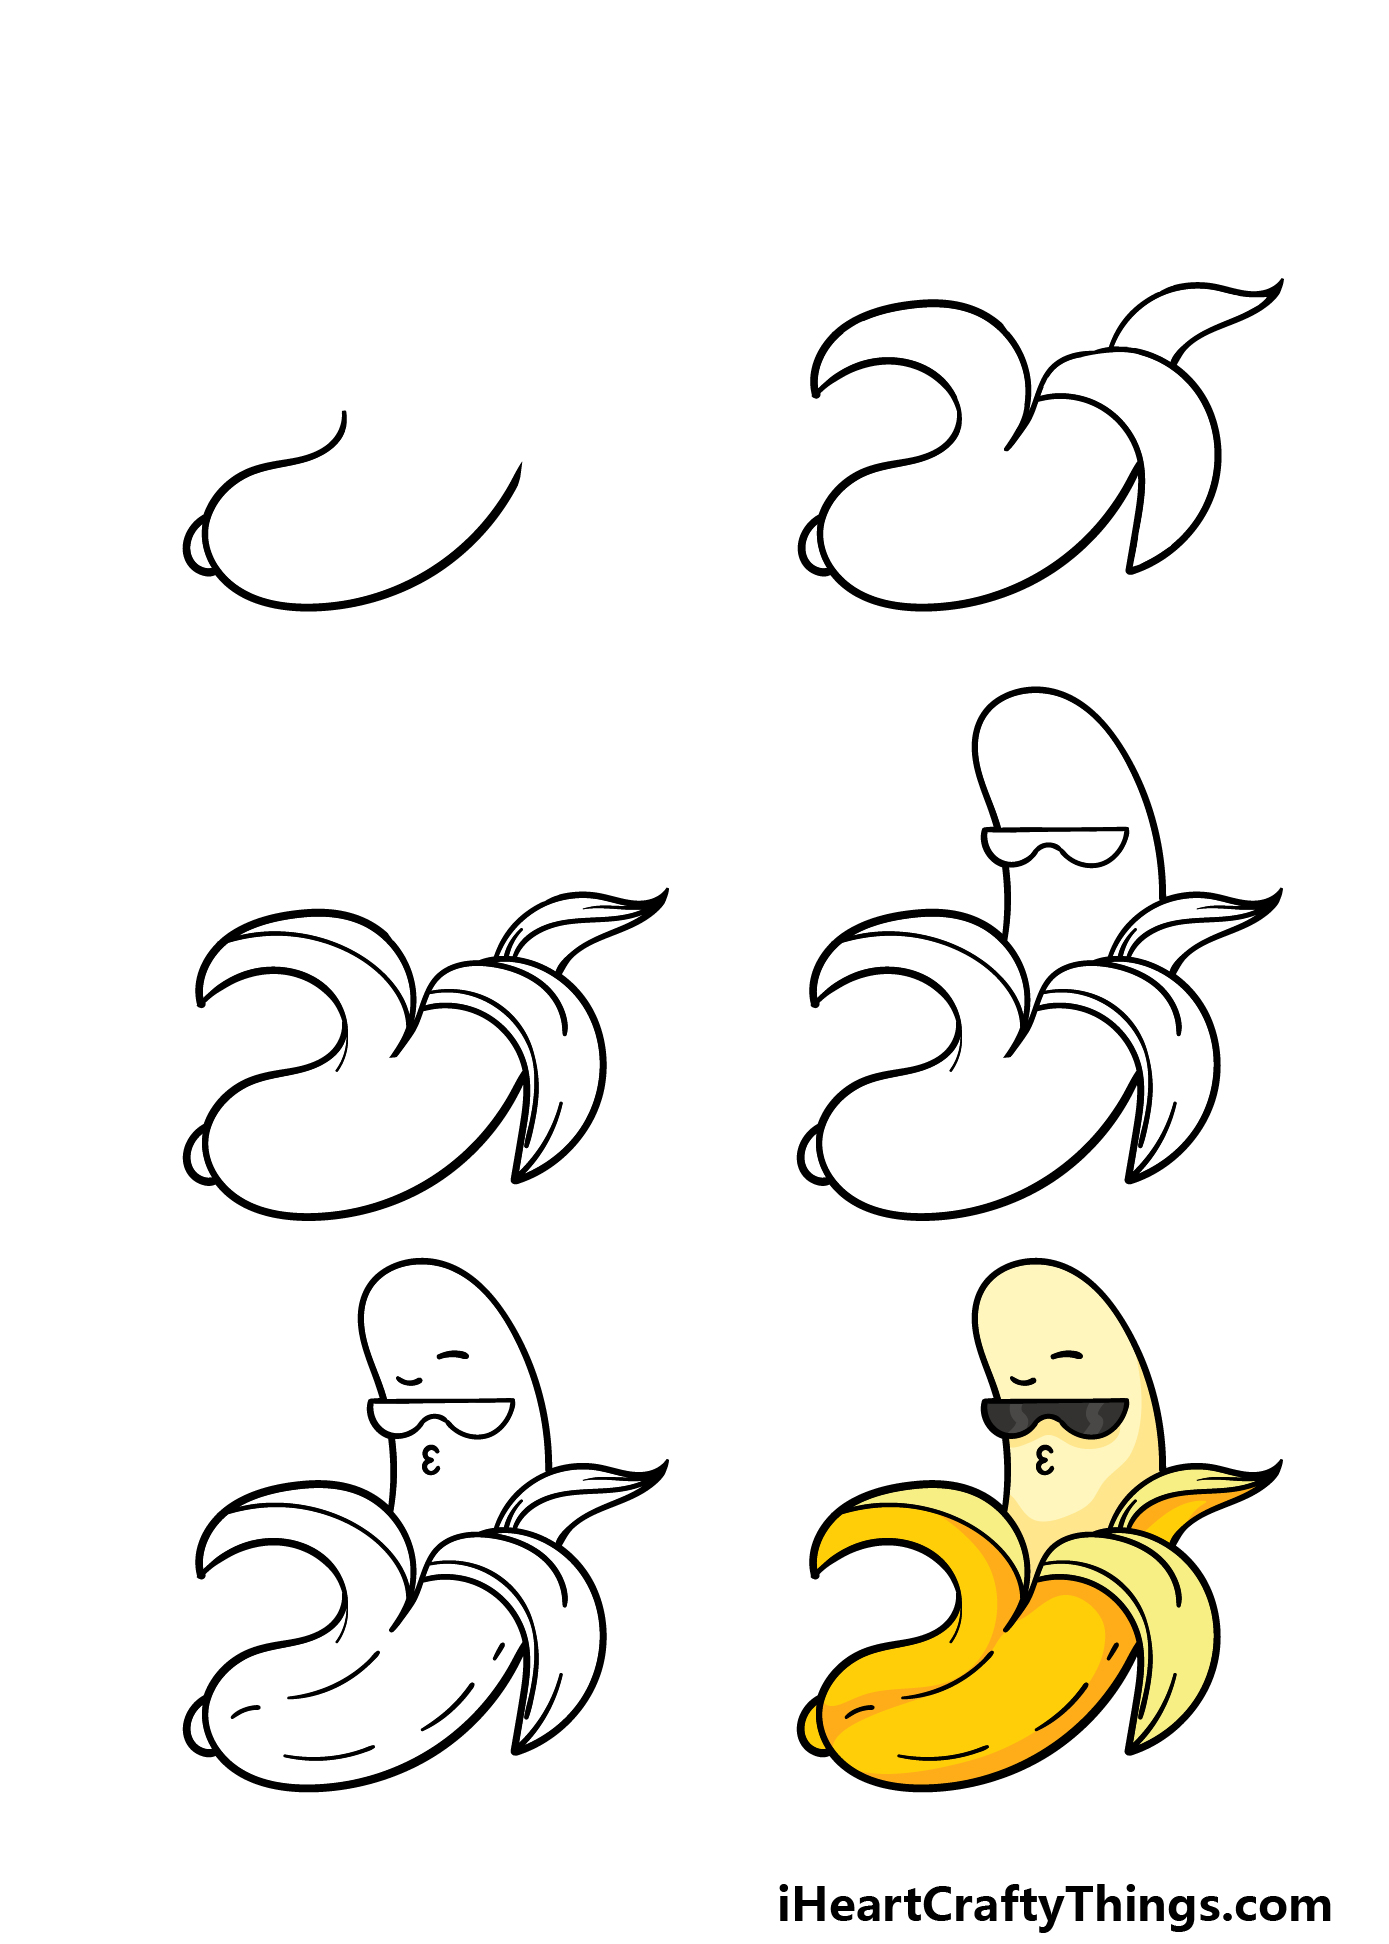 Cartoon Banana Drawing - How To Draw A Cartoon Banana Step By Step!